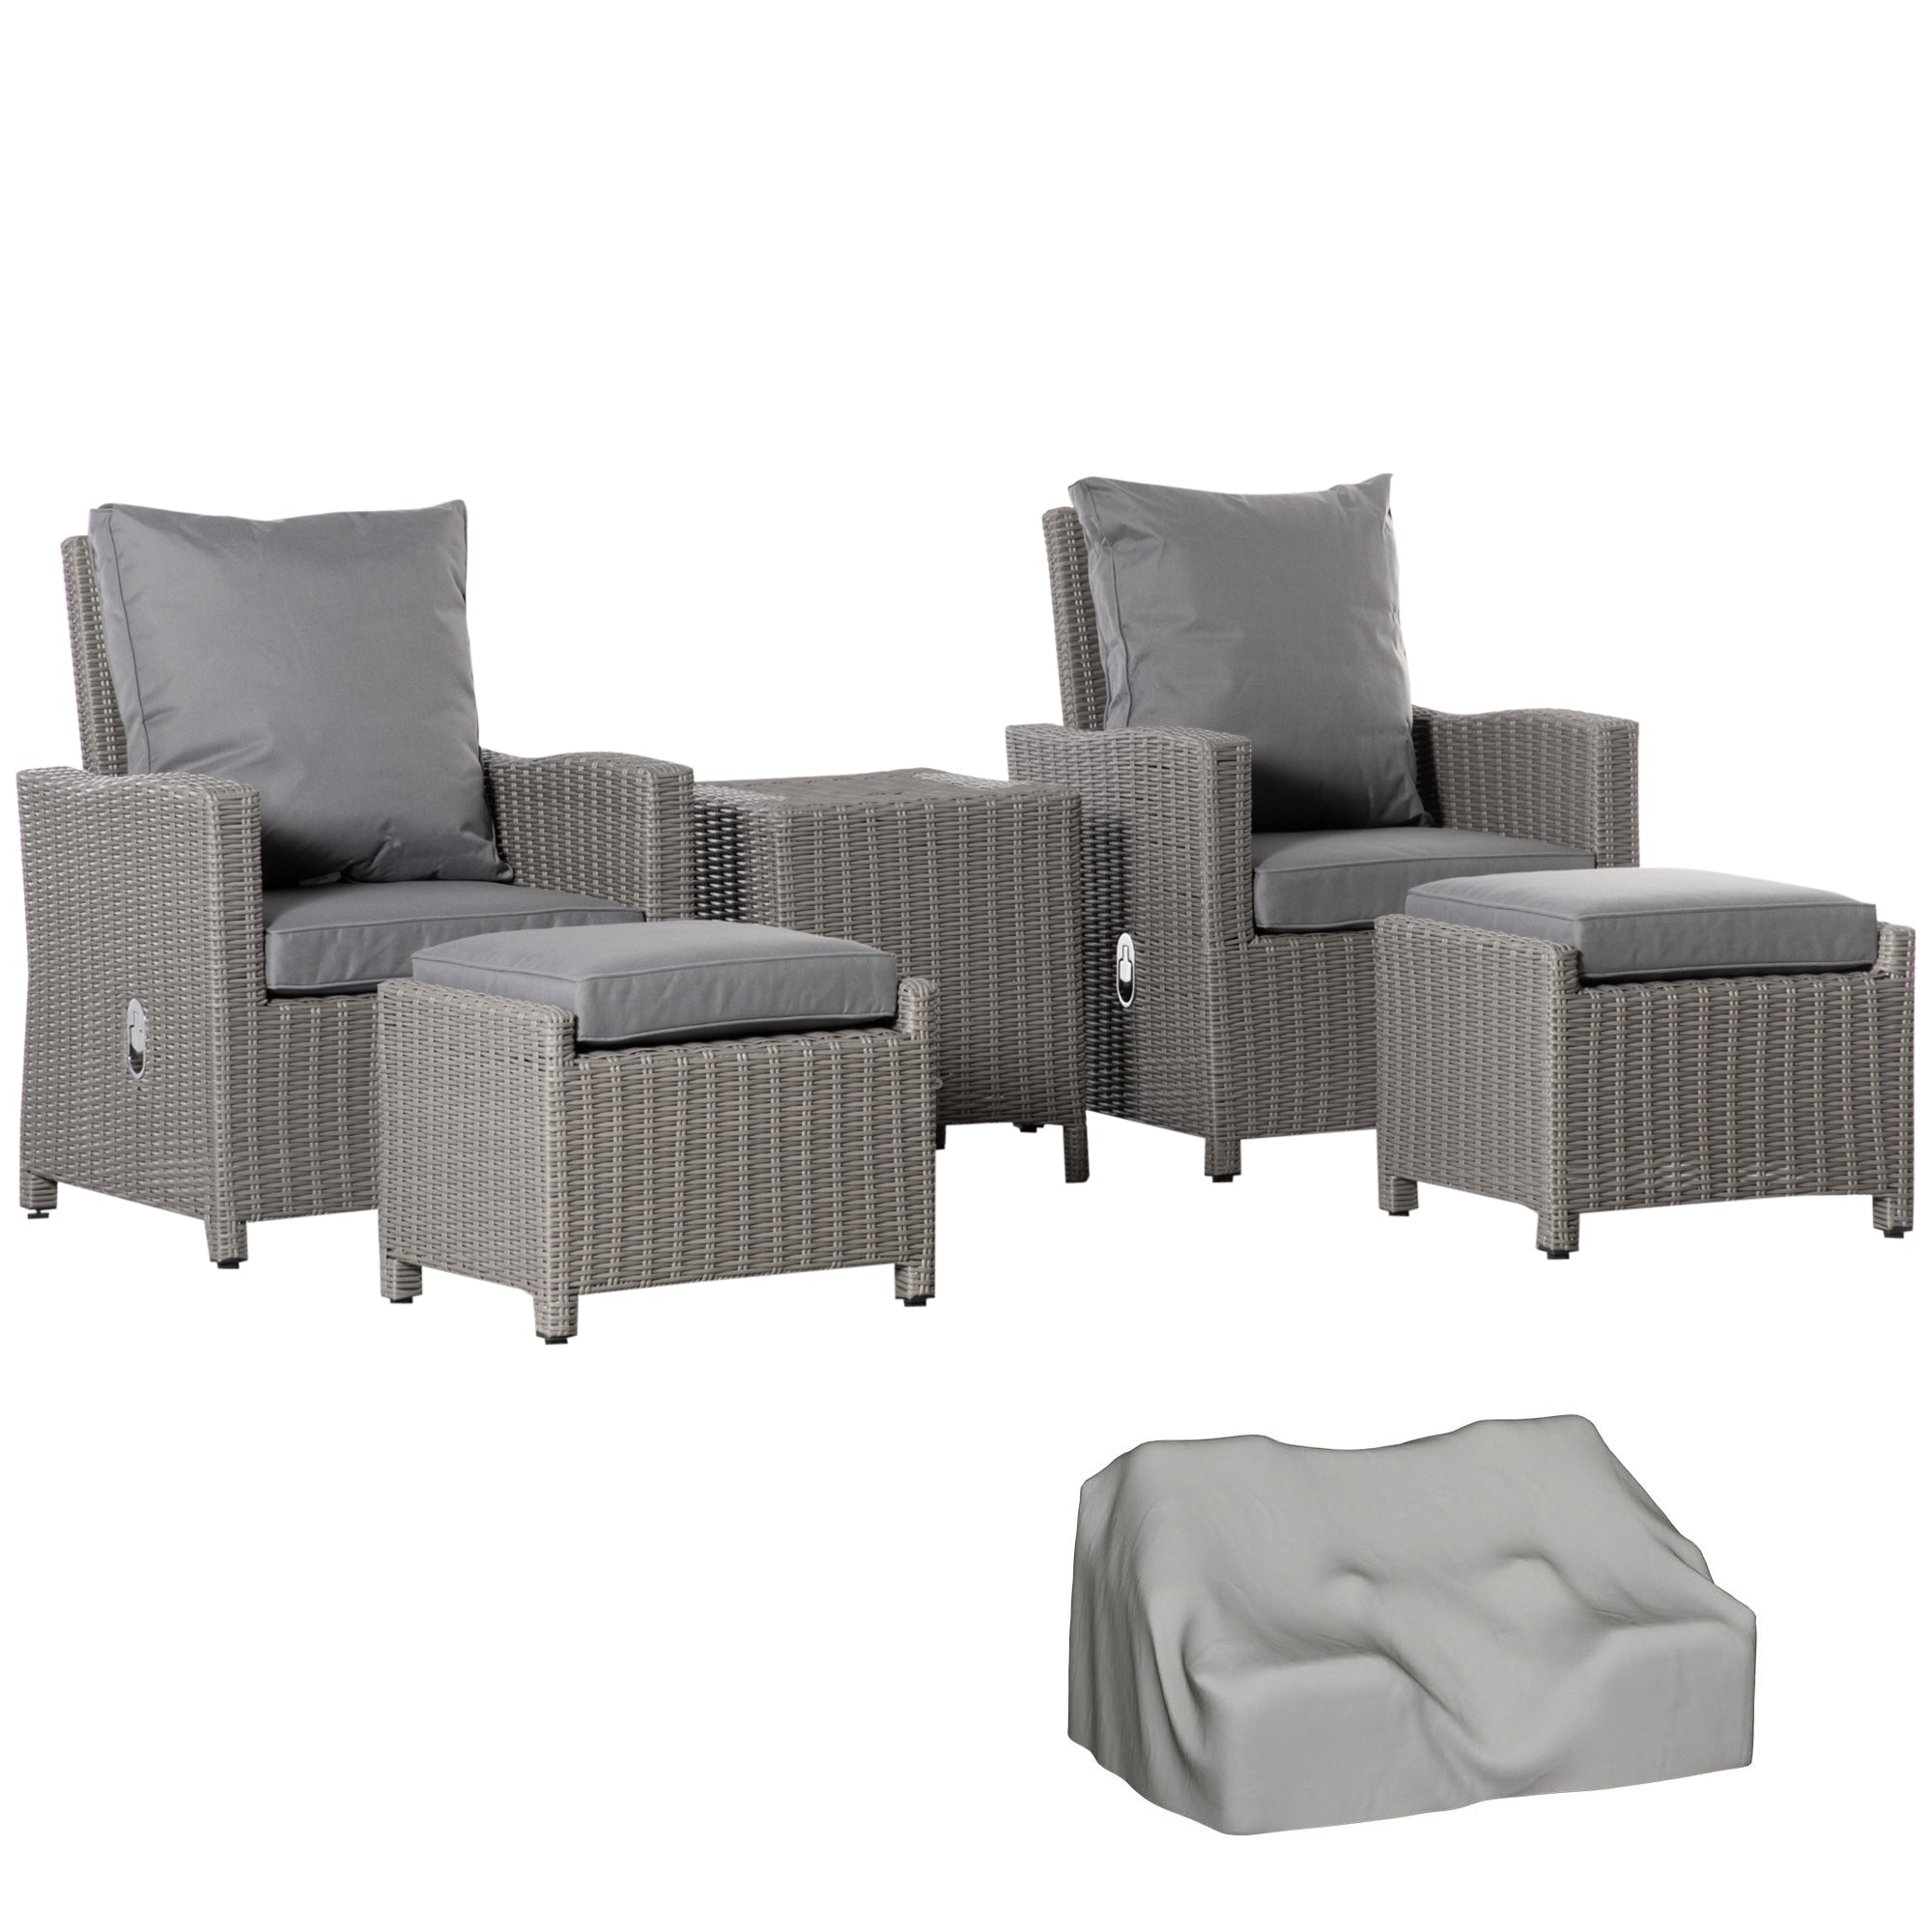 2 Seater Outdoor PE Rattan Patio Furniture Set Lounge Sofa Footstool Cooler Bar Coffee Table Conversation Set with Olefin Cushion-0